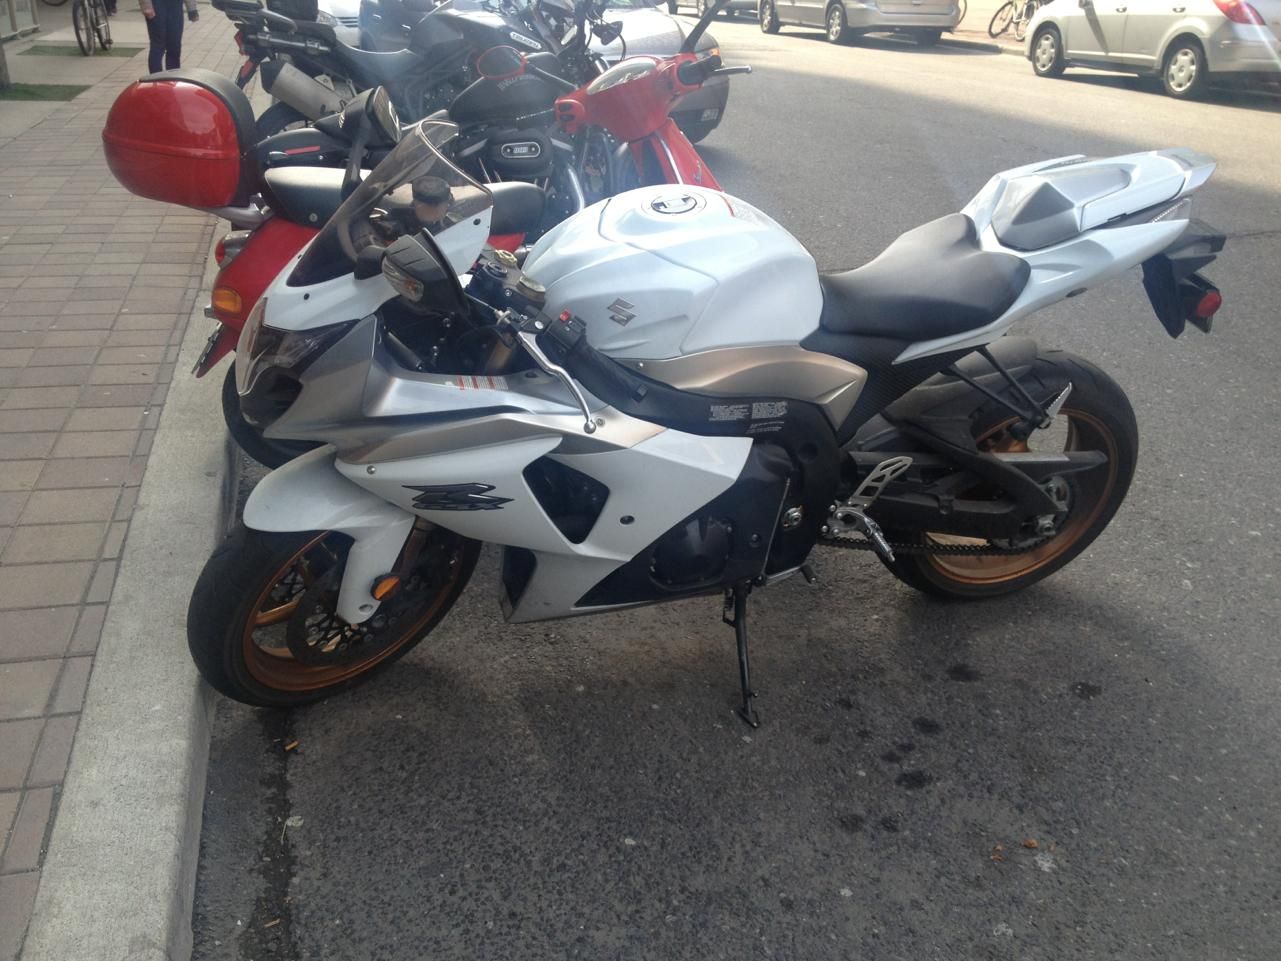 Bad motorcycle parking